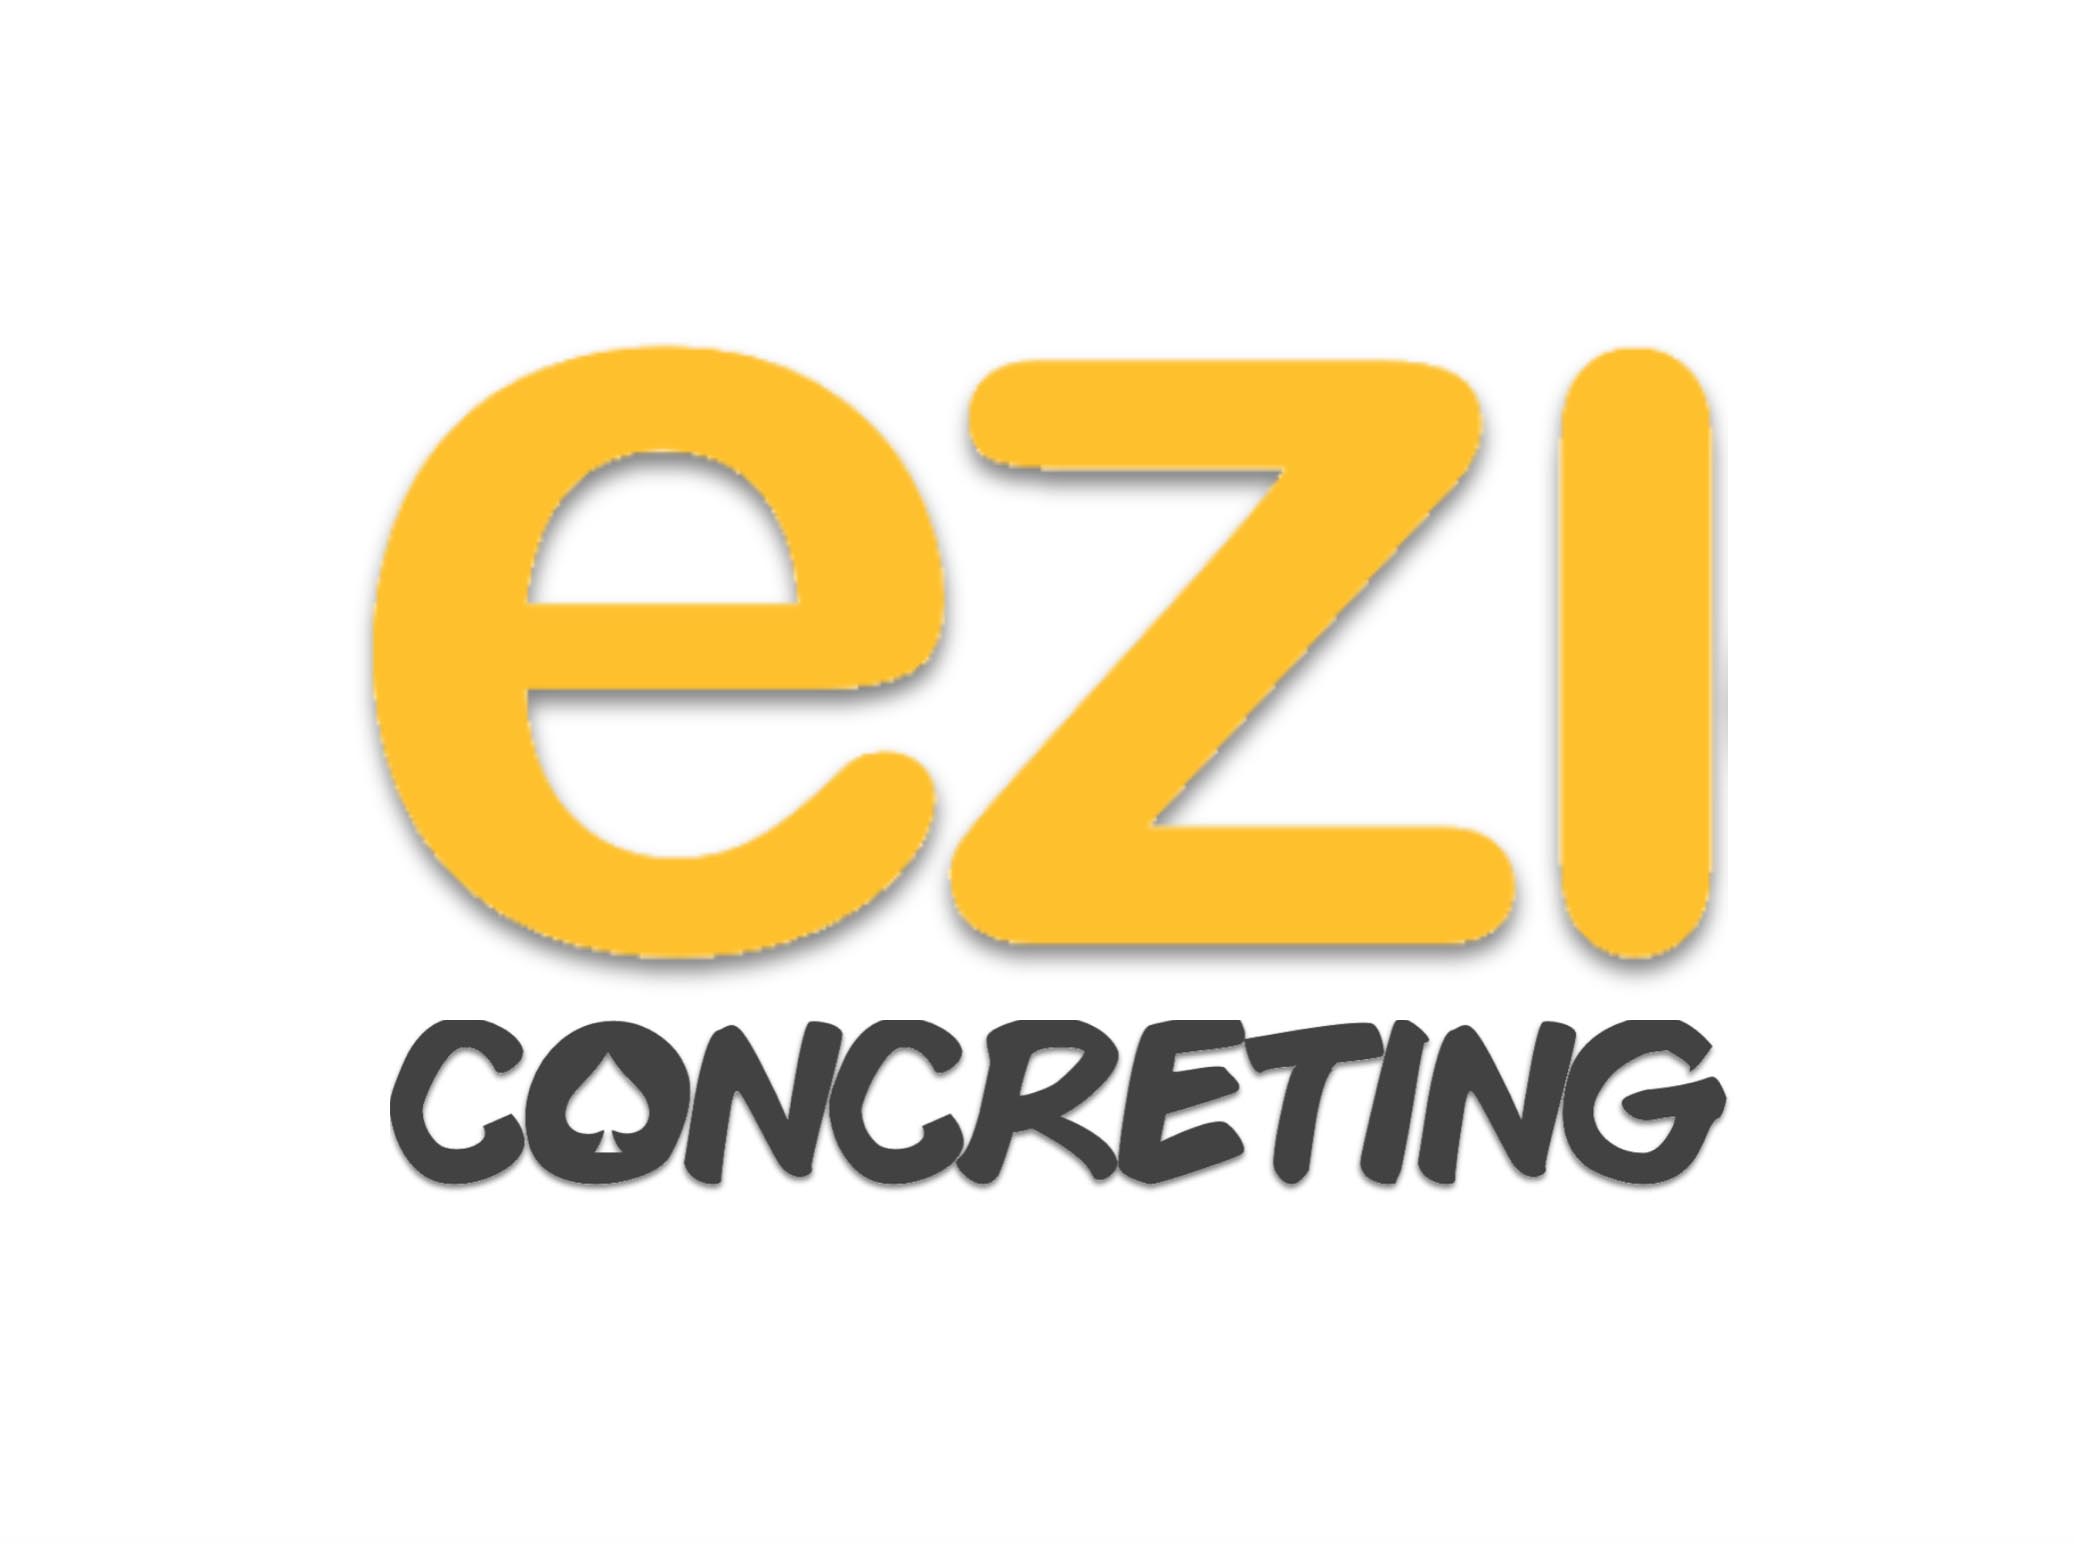 Ezi Concreting